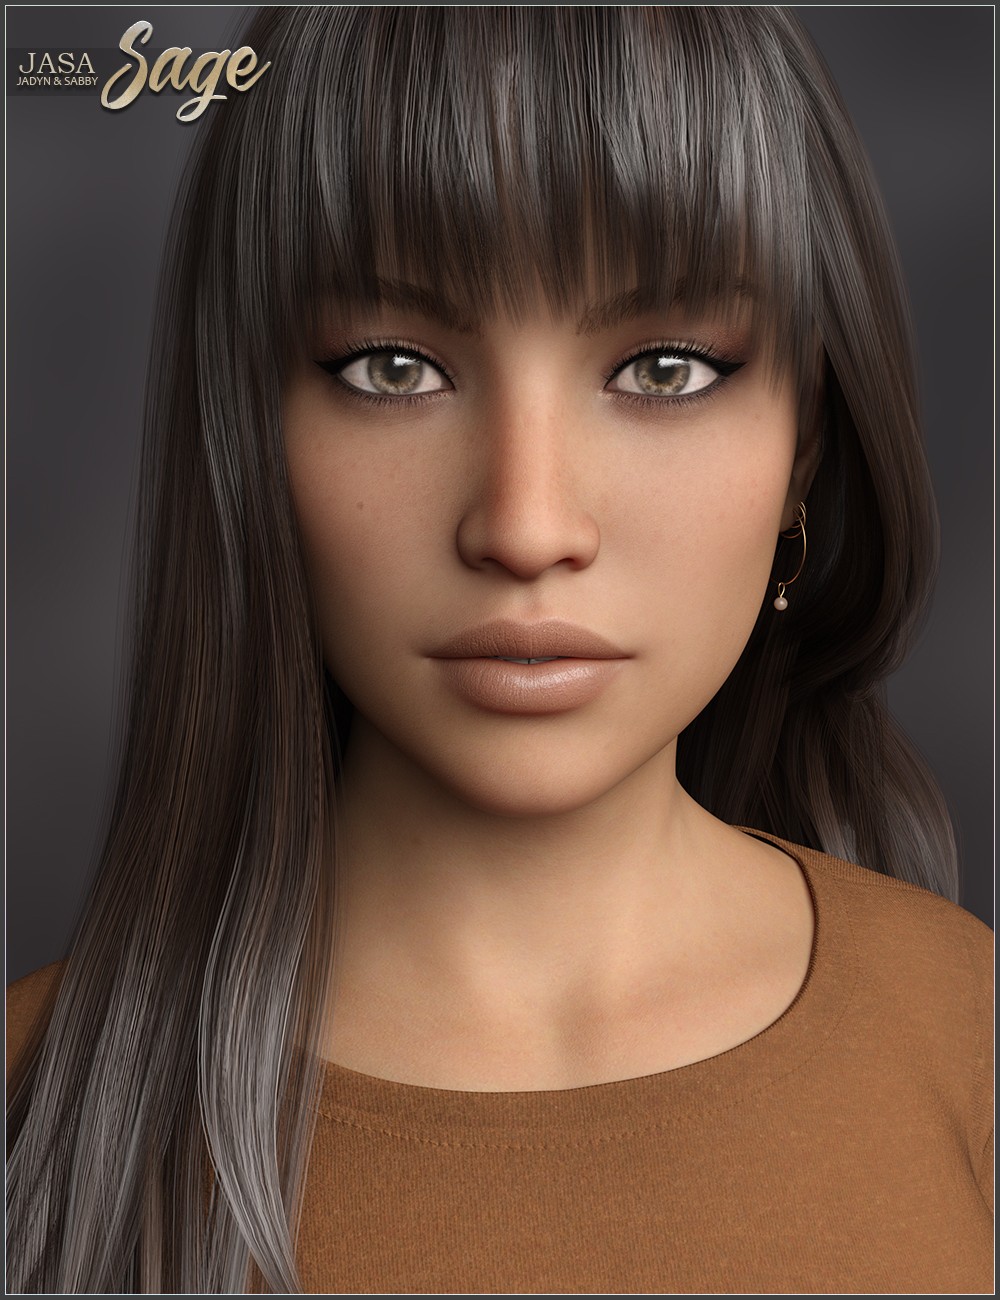 JASA Sage for Genesis 8 and 8.1 Females by: SabbyJadyn, 3D Models by Daz 3D